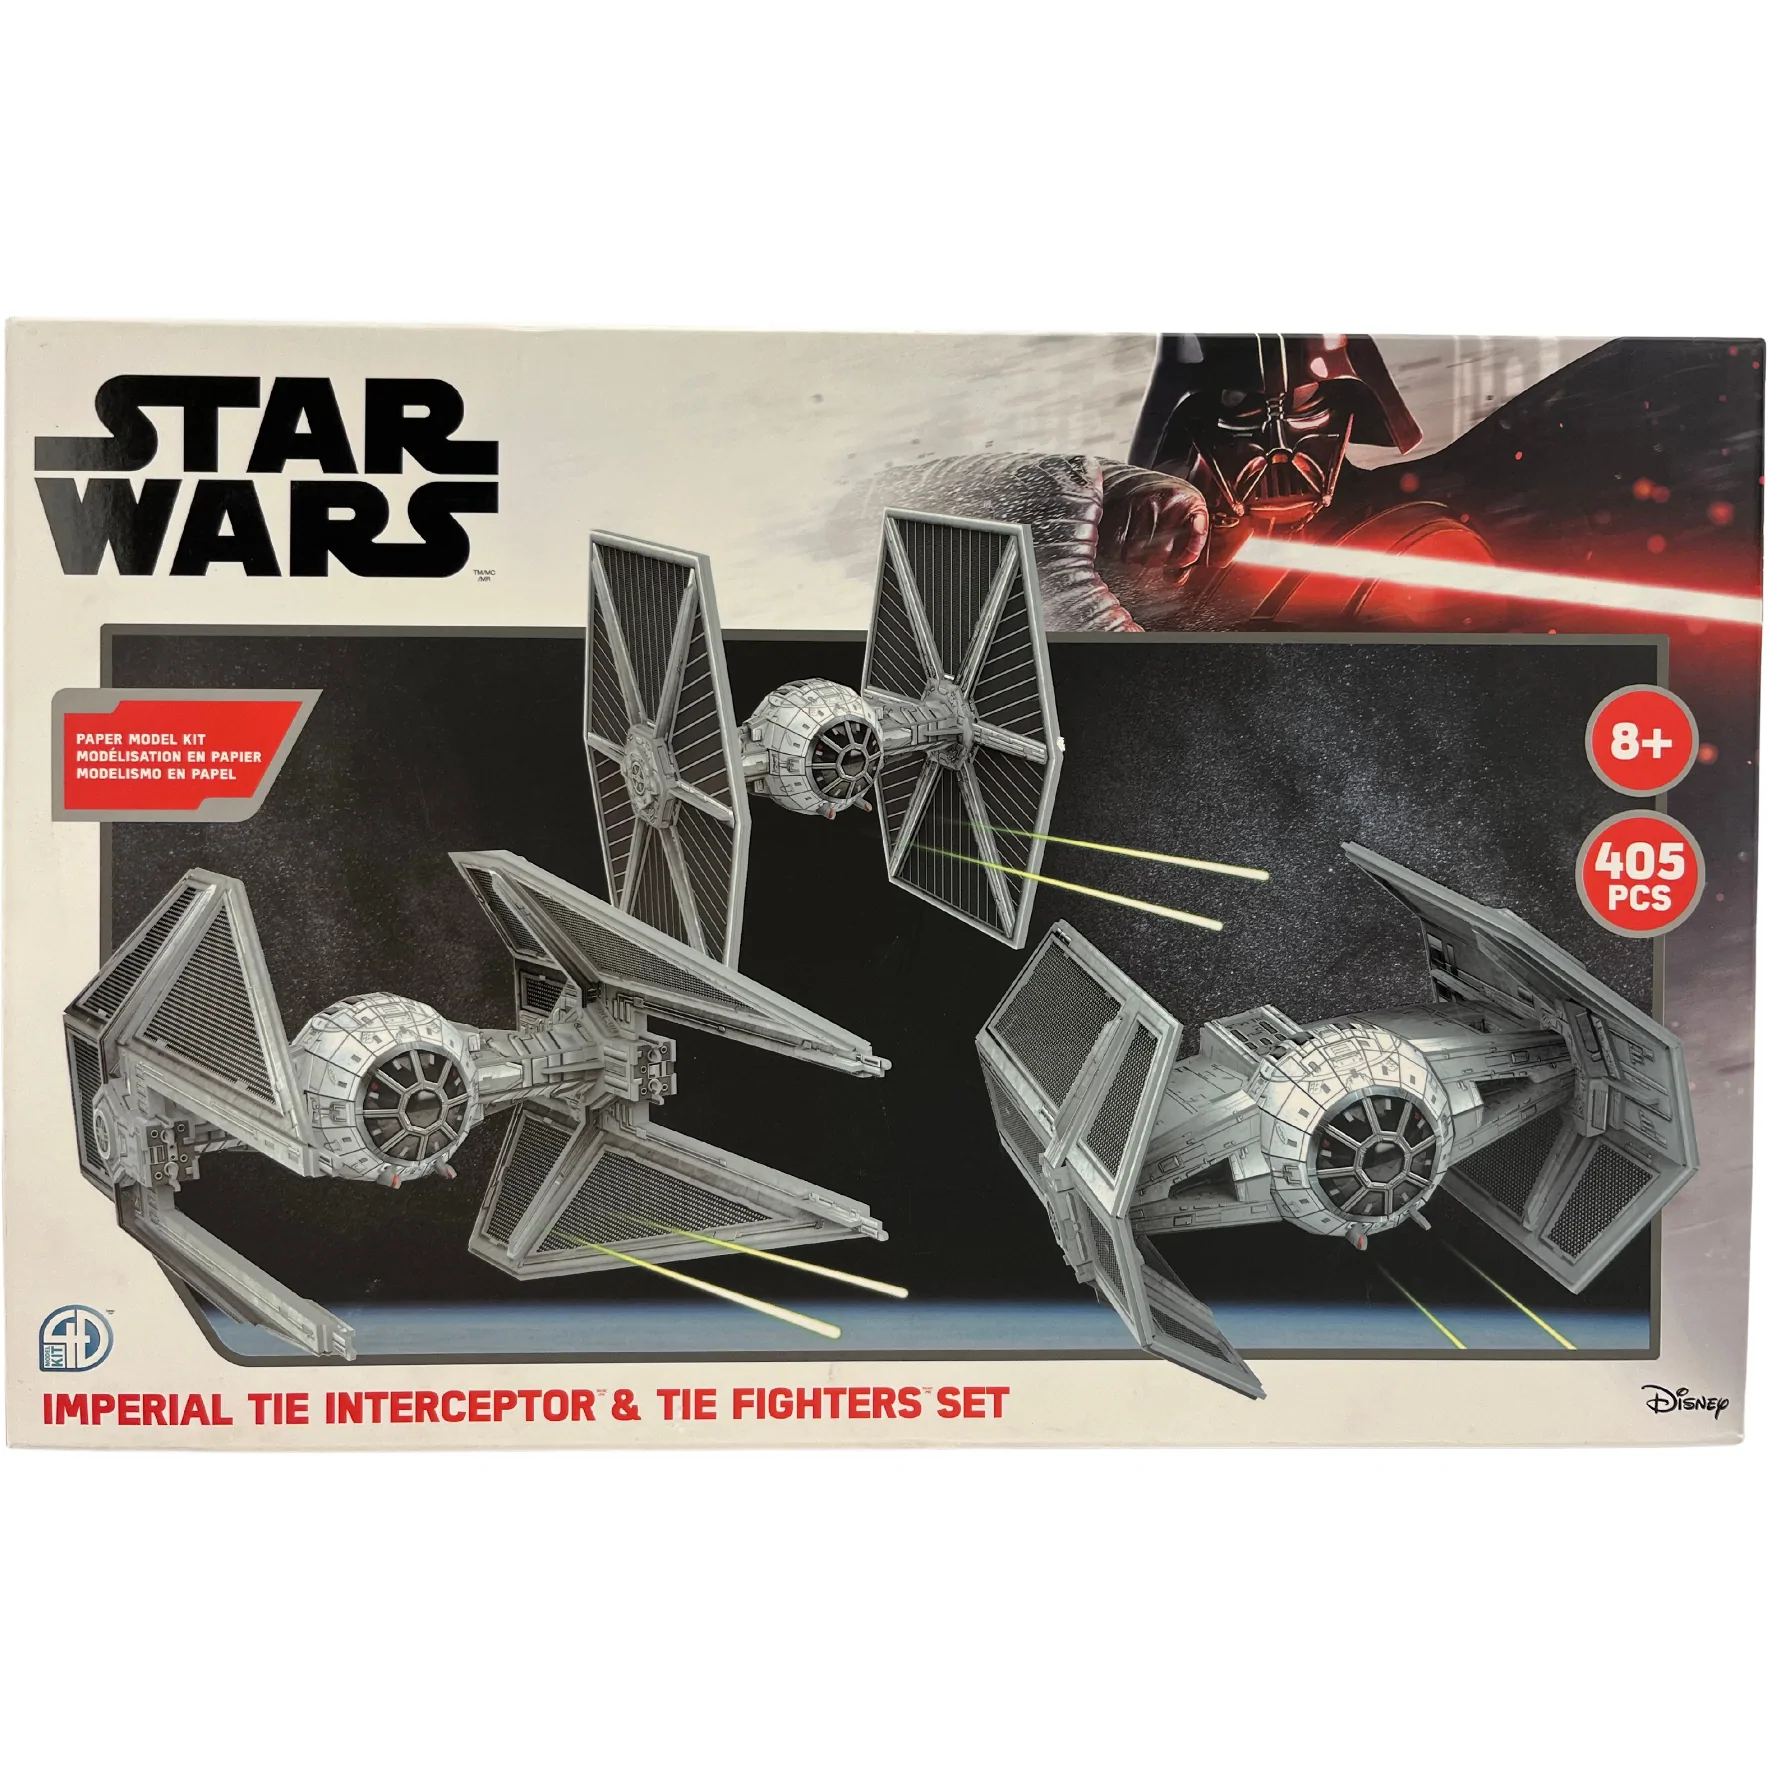 Star Wars Imperial Tie Interceptor & Tie Fighters Set Building Model: Paper Building Model / 405 Pieces / 8+ **DEALS**